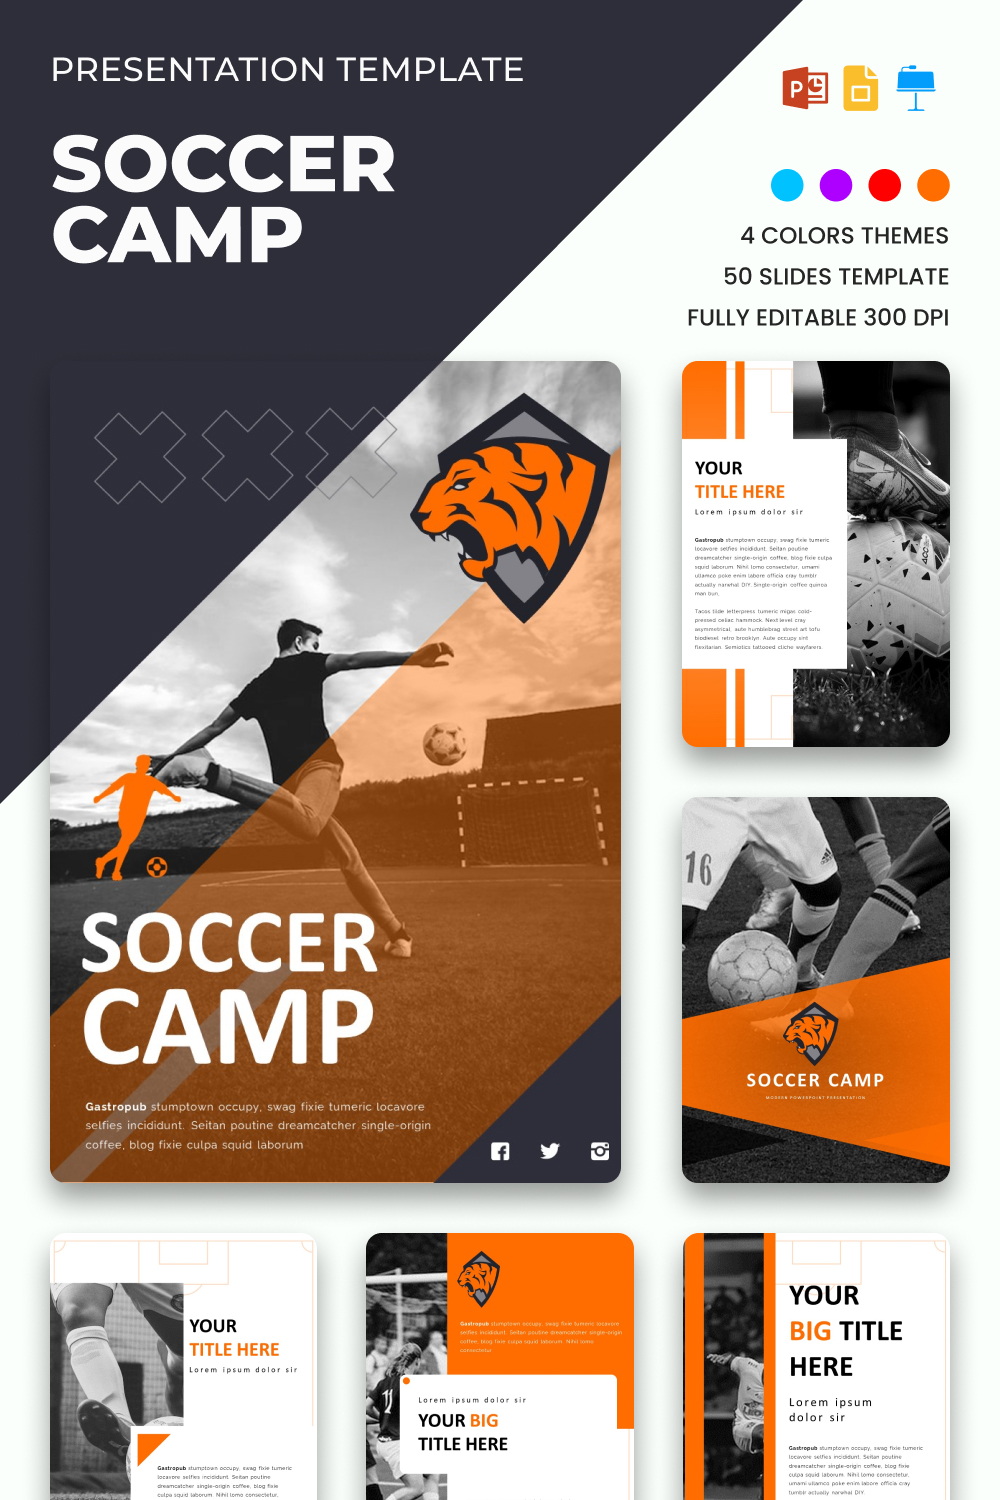 Images soccer camp presentation template of pinterest.